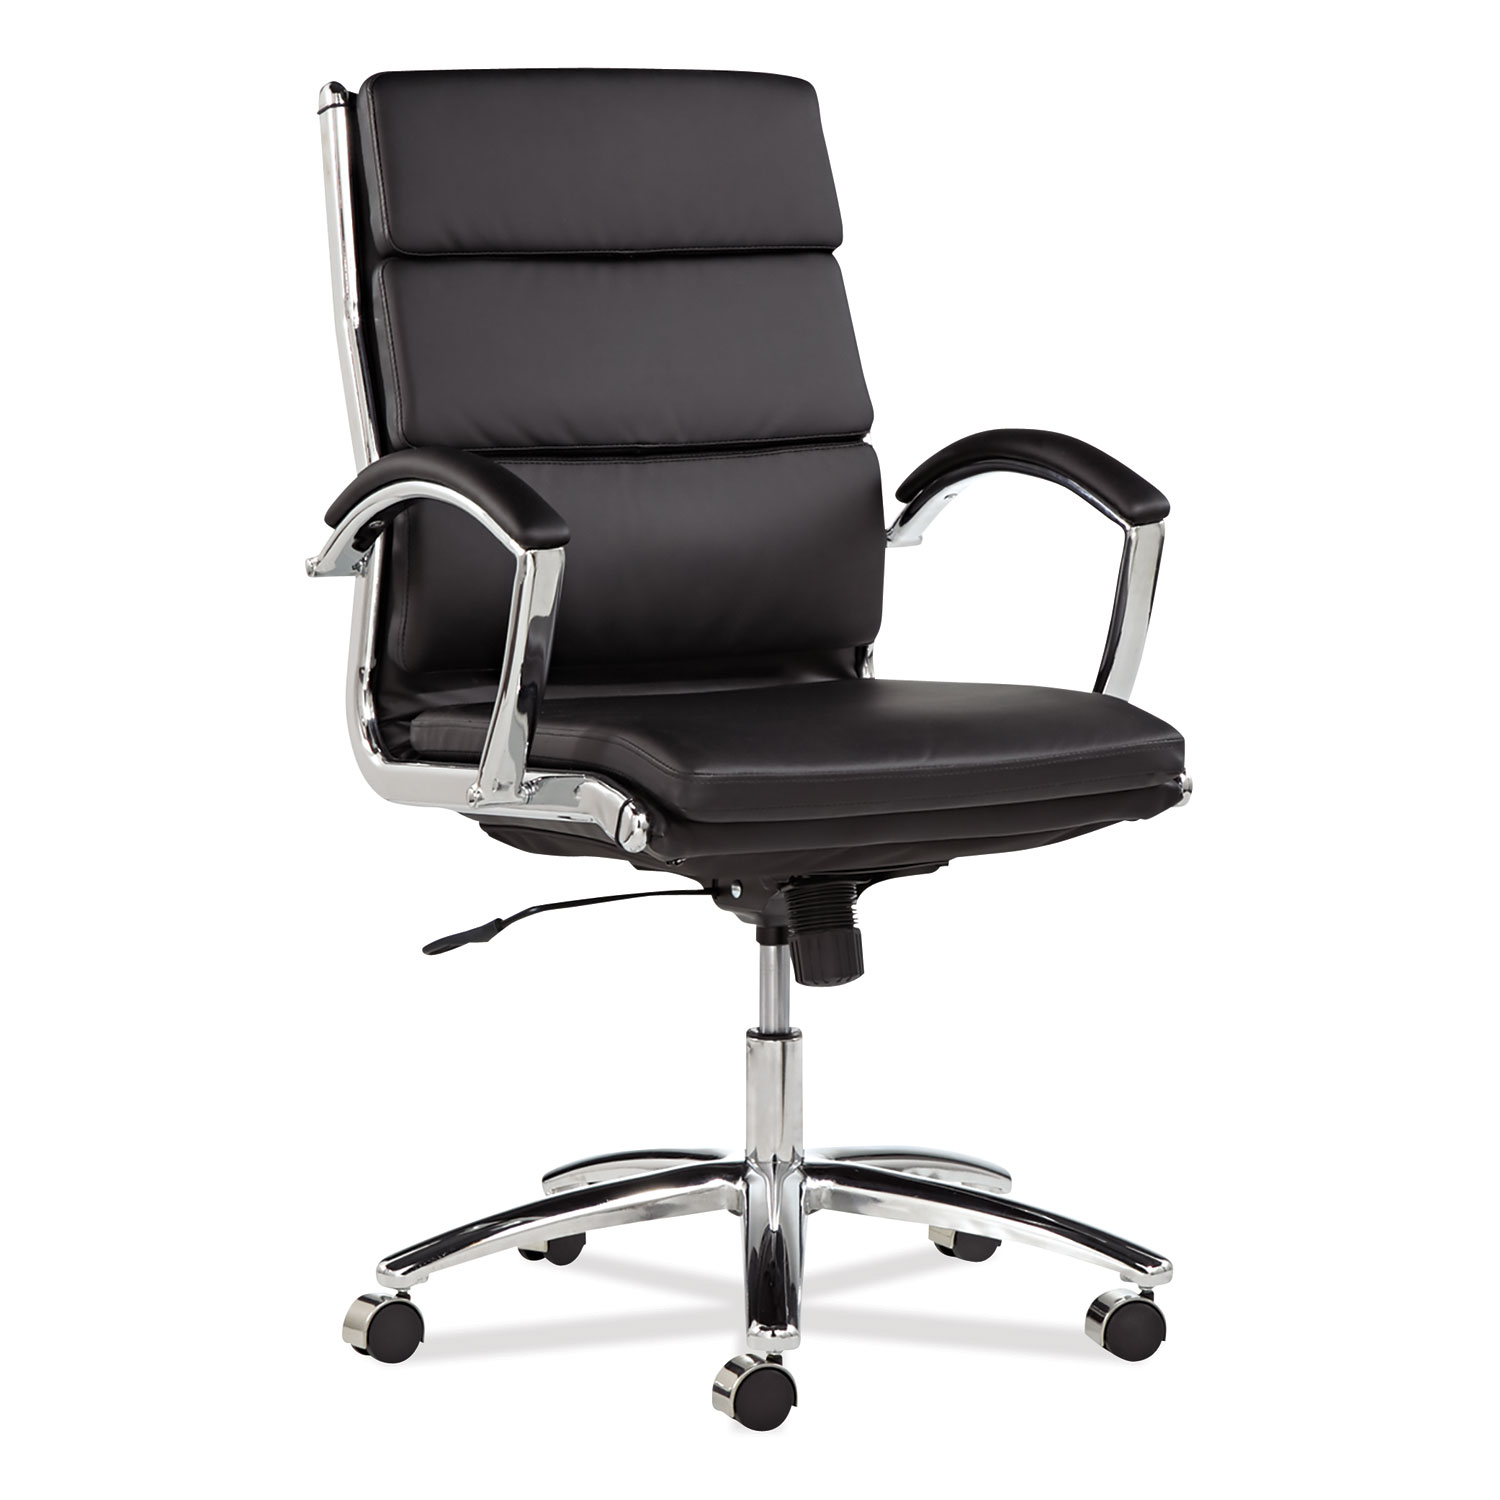 Alera Neratoli Mid-Back Slim Profile Chair, Faux Leather, Supports Up to 275 lb, Black Seat/Back, Chrome Base - image 1 of 8